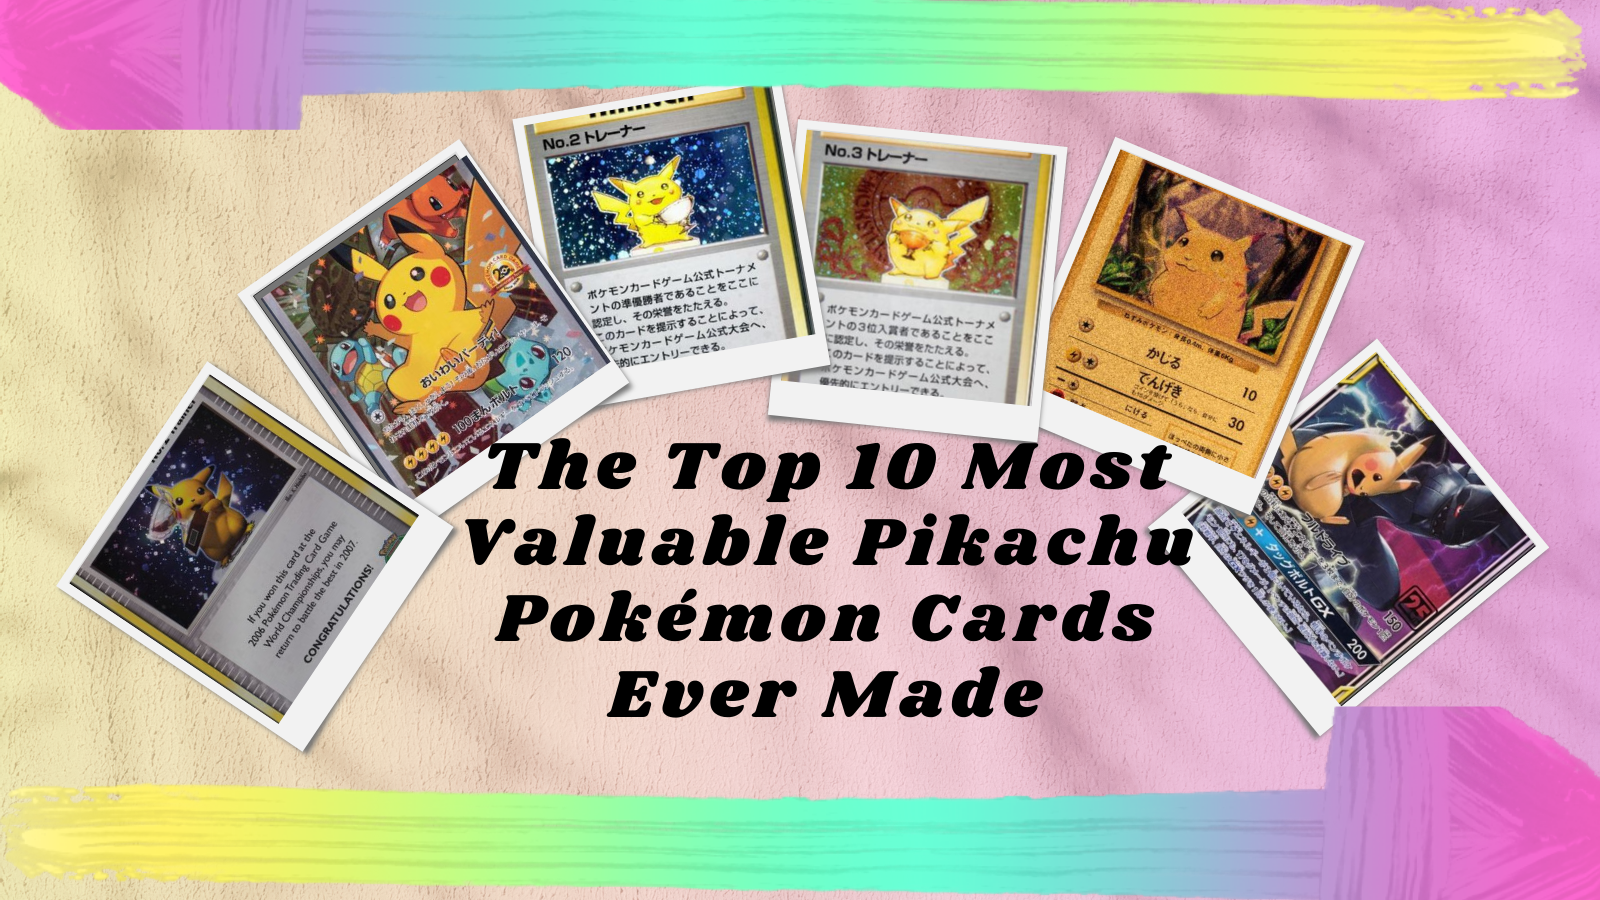 The Top 10 Most Valuable Pikachu Pokémon Cards